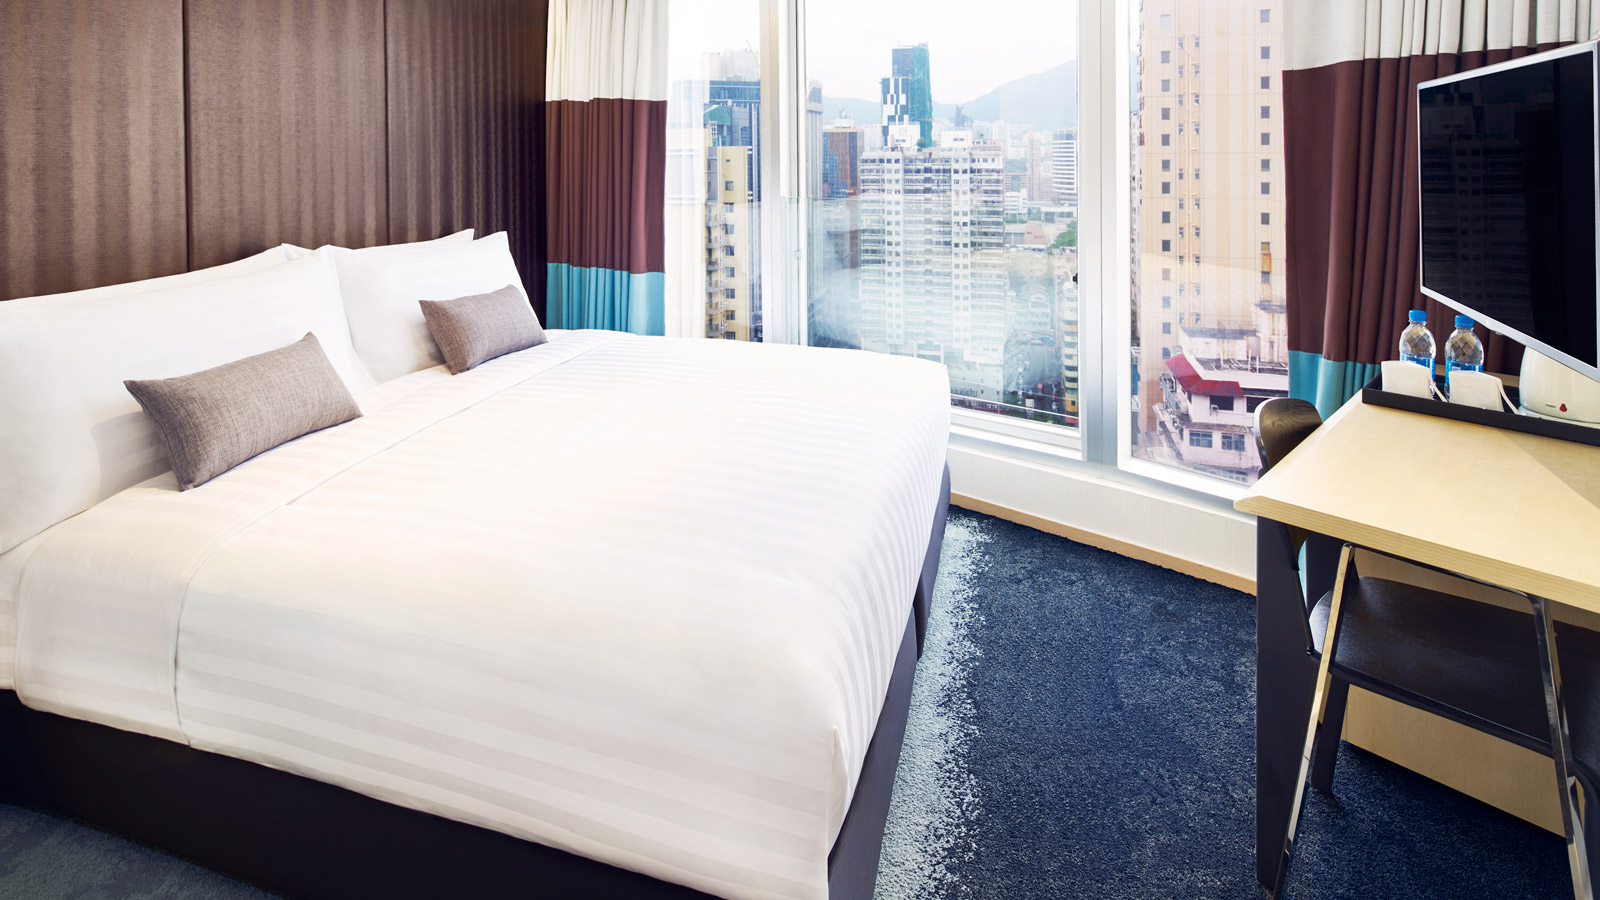 Classic - Hotel 108, Hong Kong - Отель 108, Гонконг